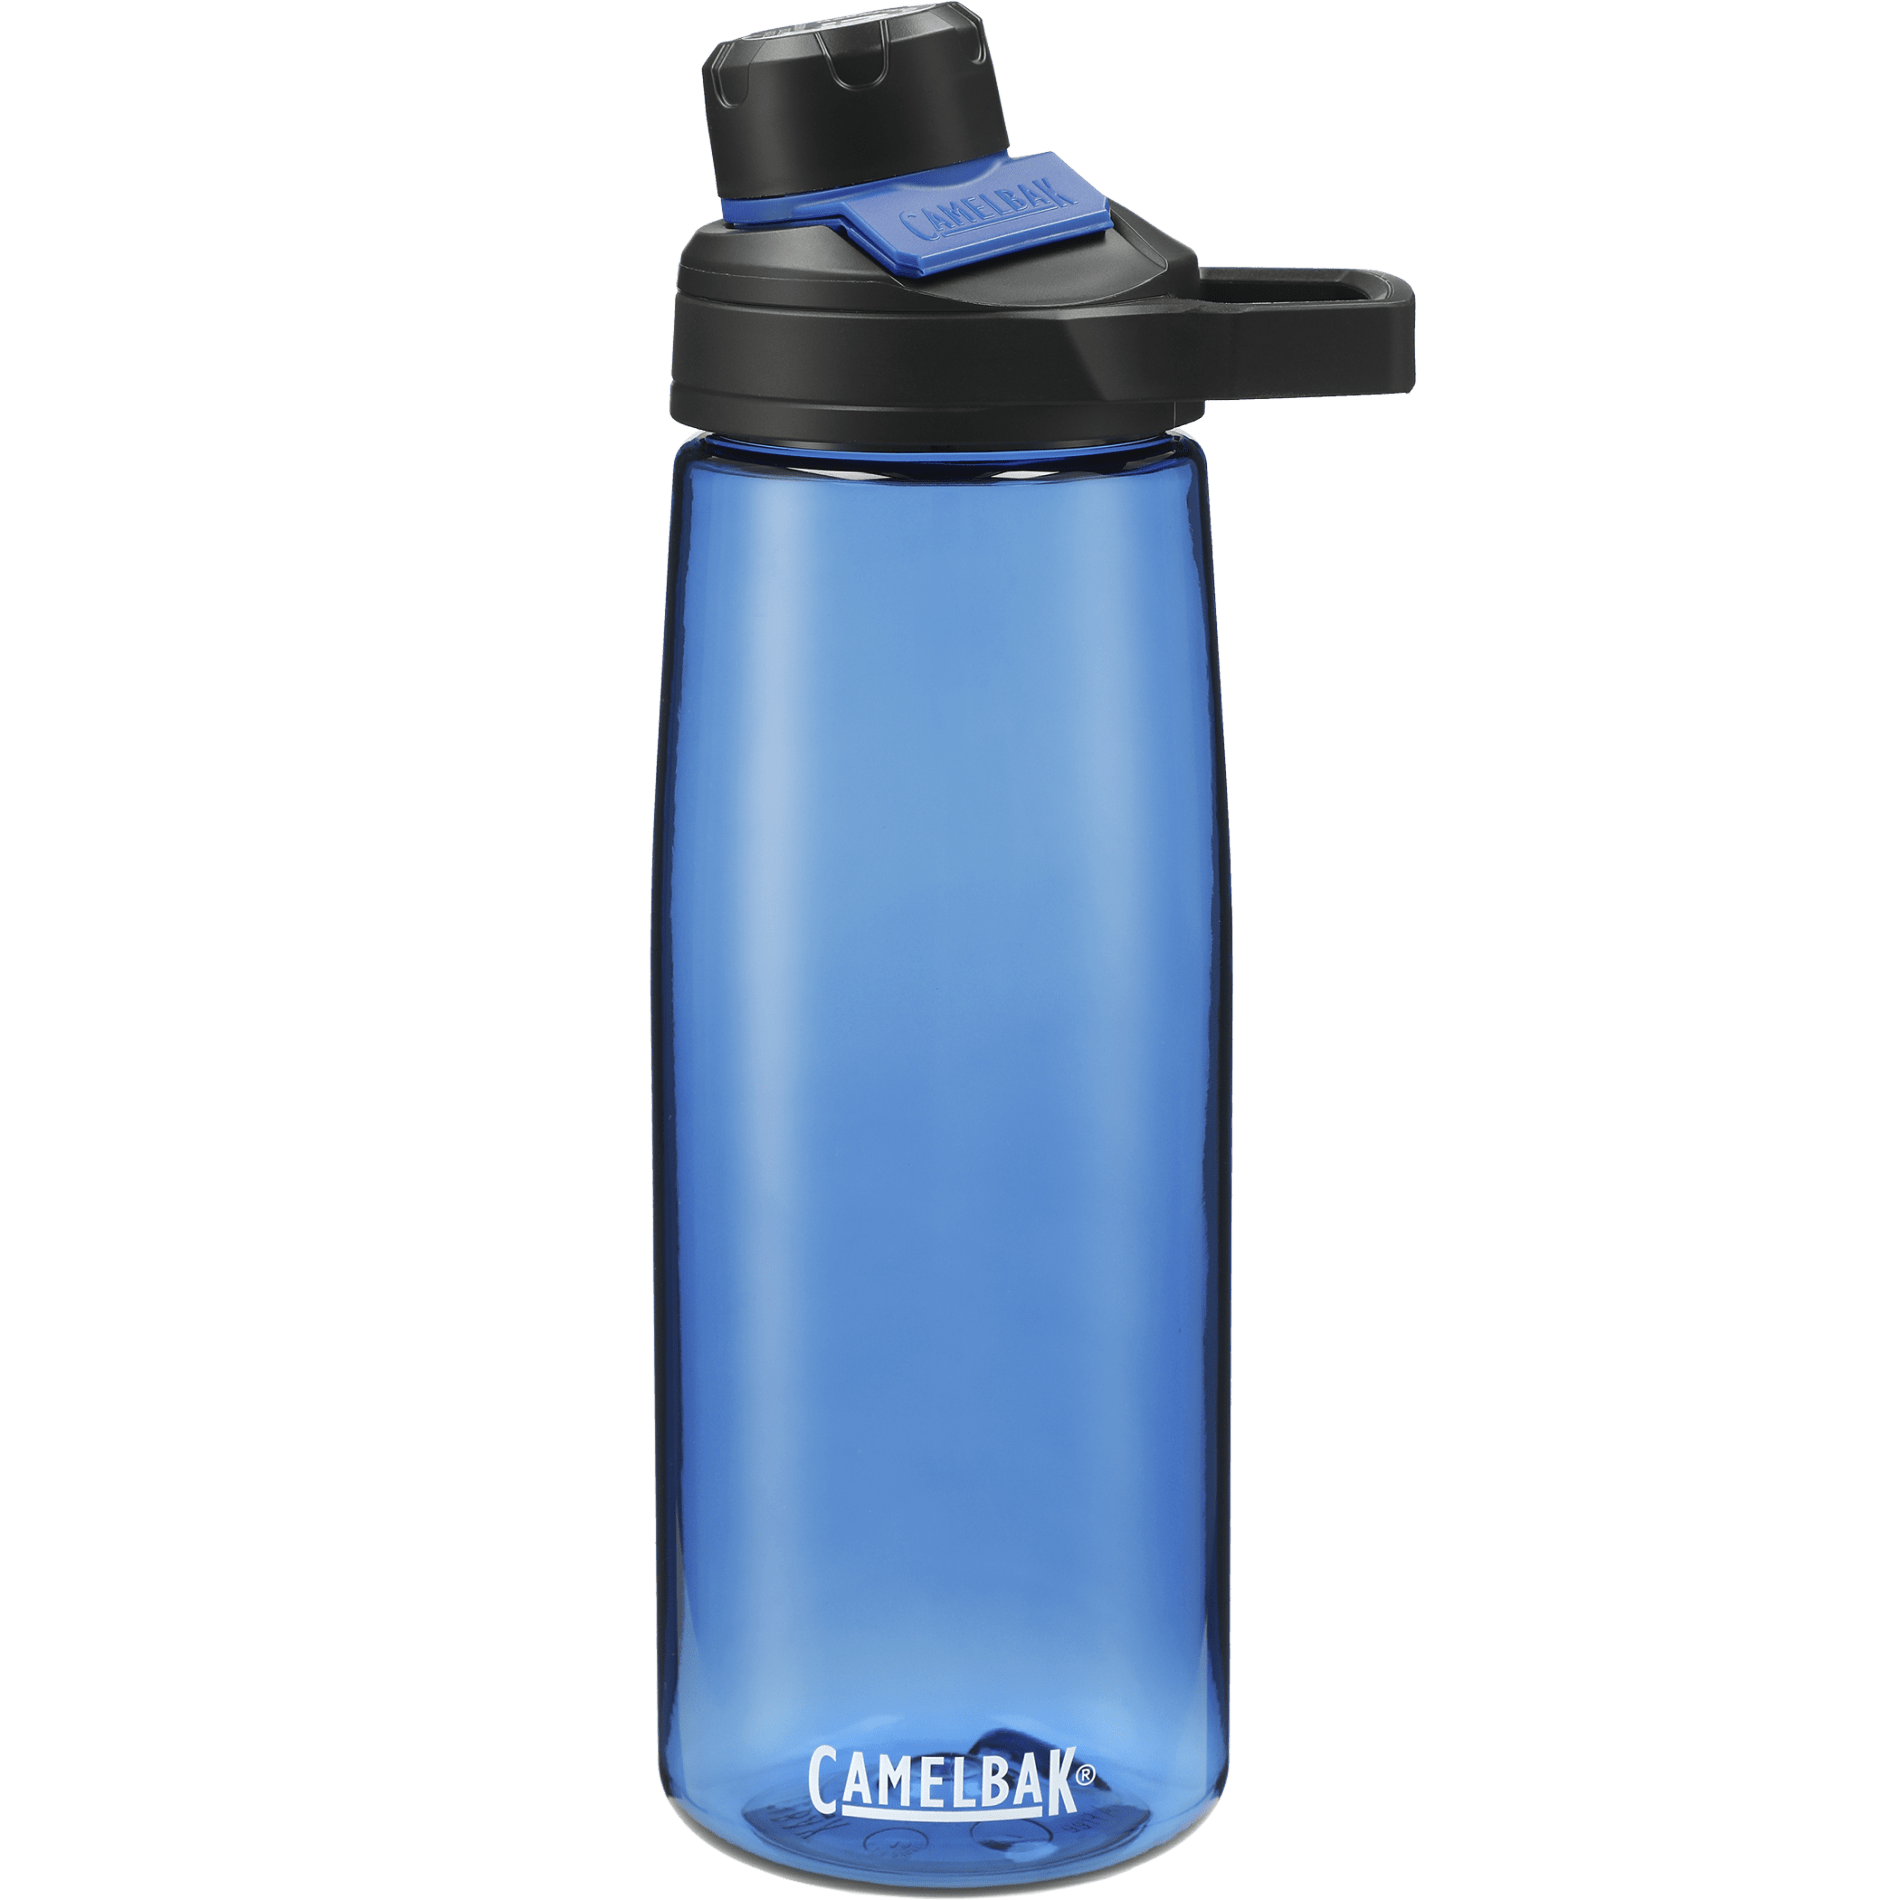 CamelBak Chute Mag BPA Free Water Bottle with Tritan Renew 32 Oz Clear